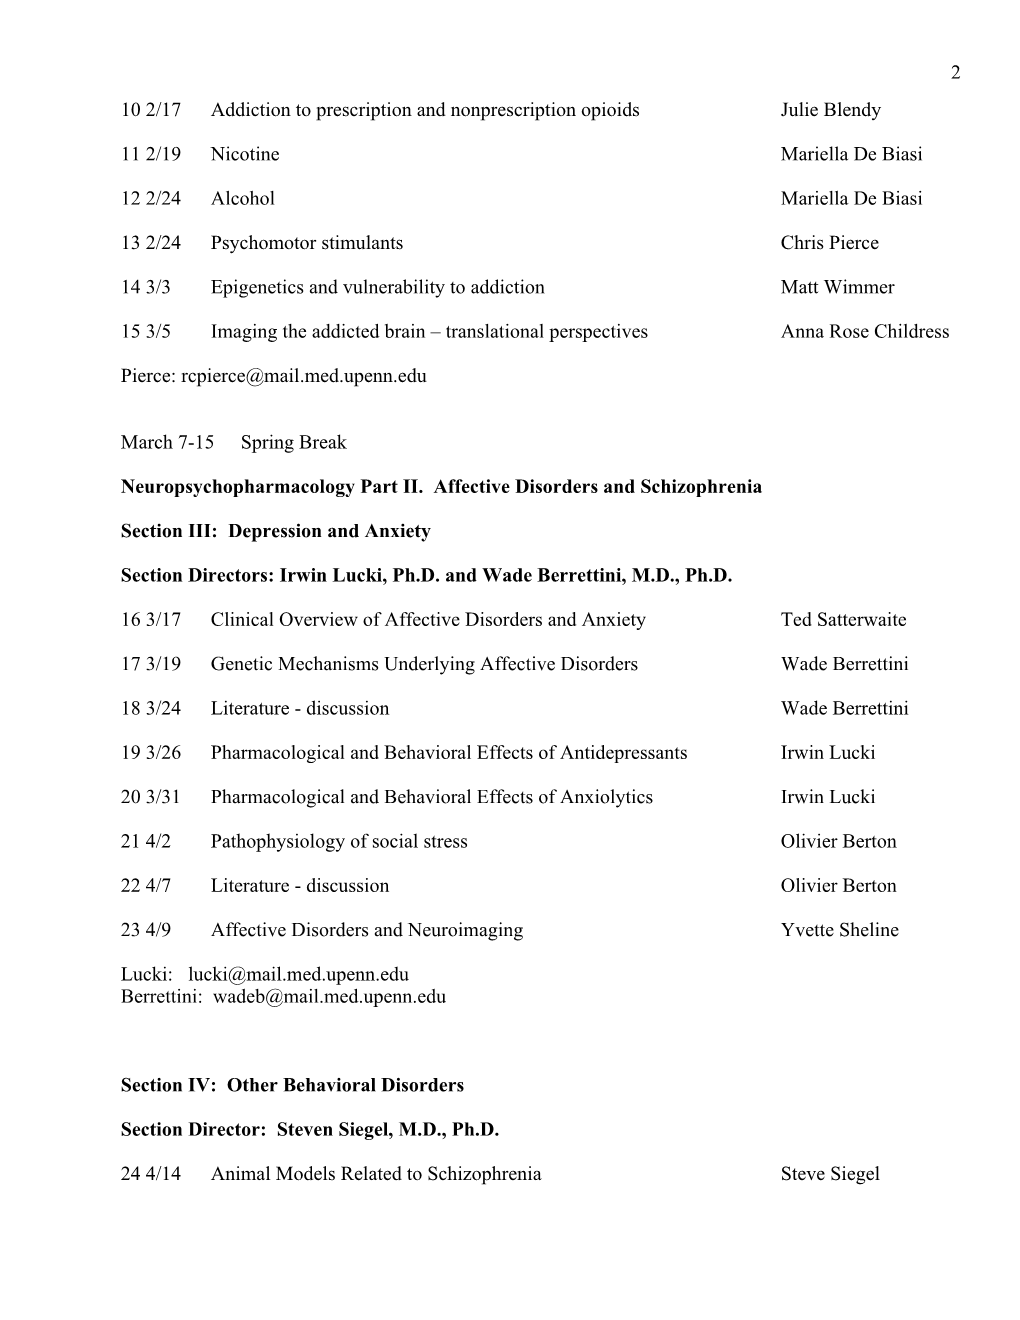 Provisional Syllabus: Advanced Topics in Neuropsychopharmacology